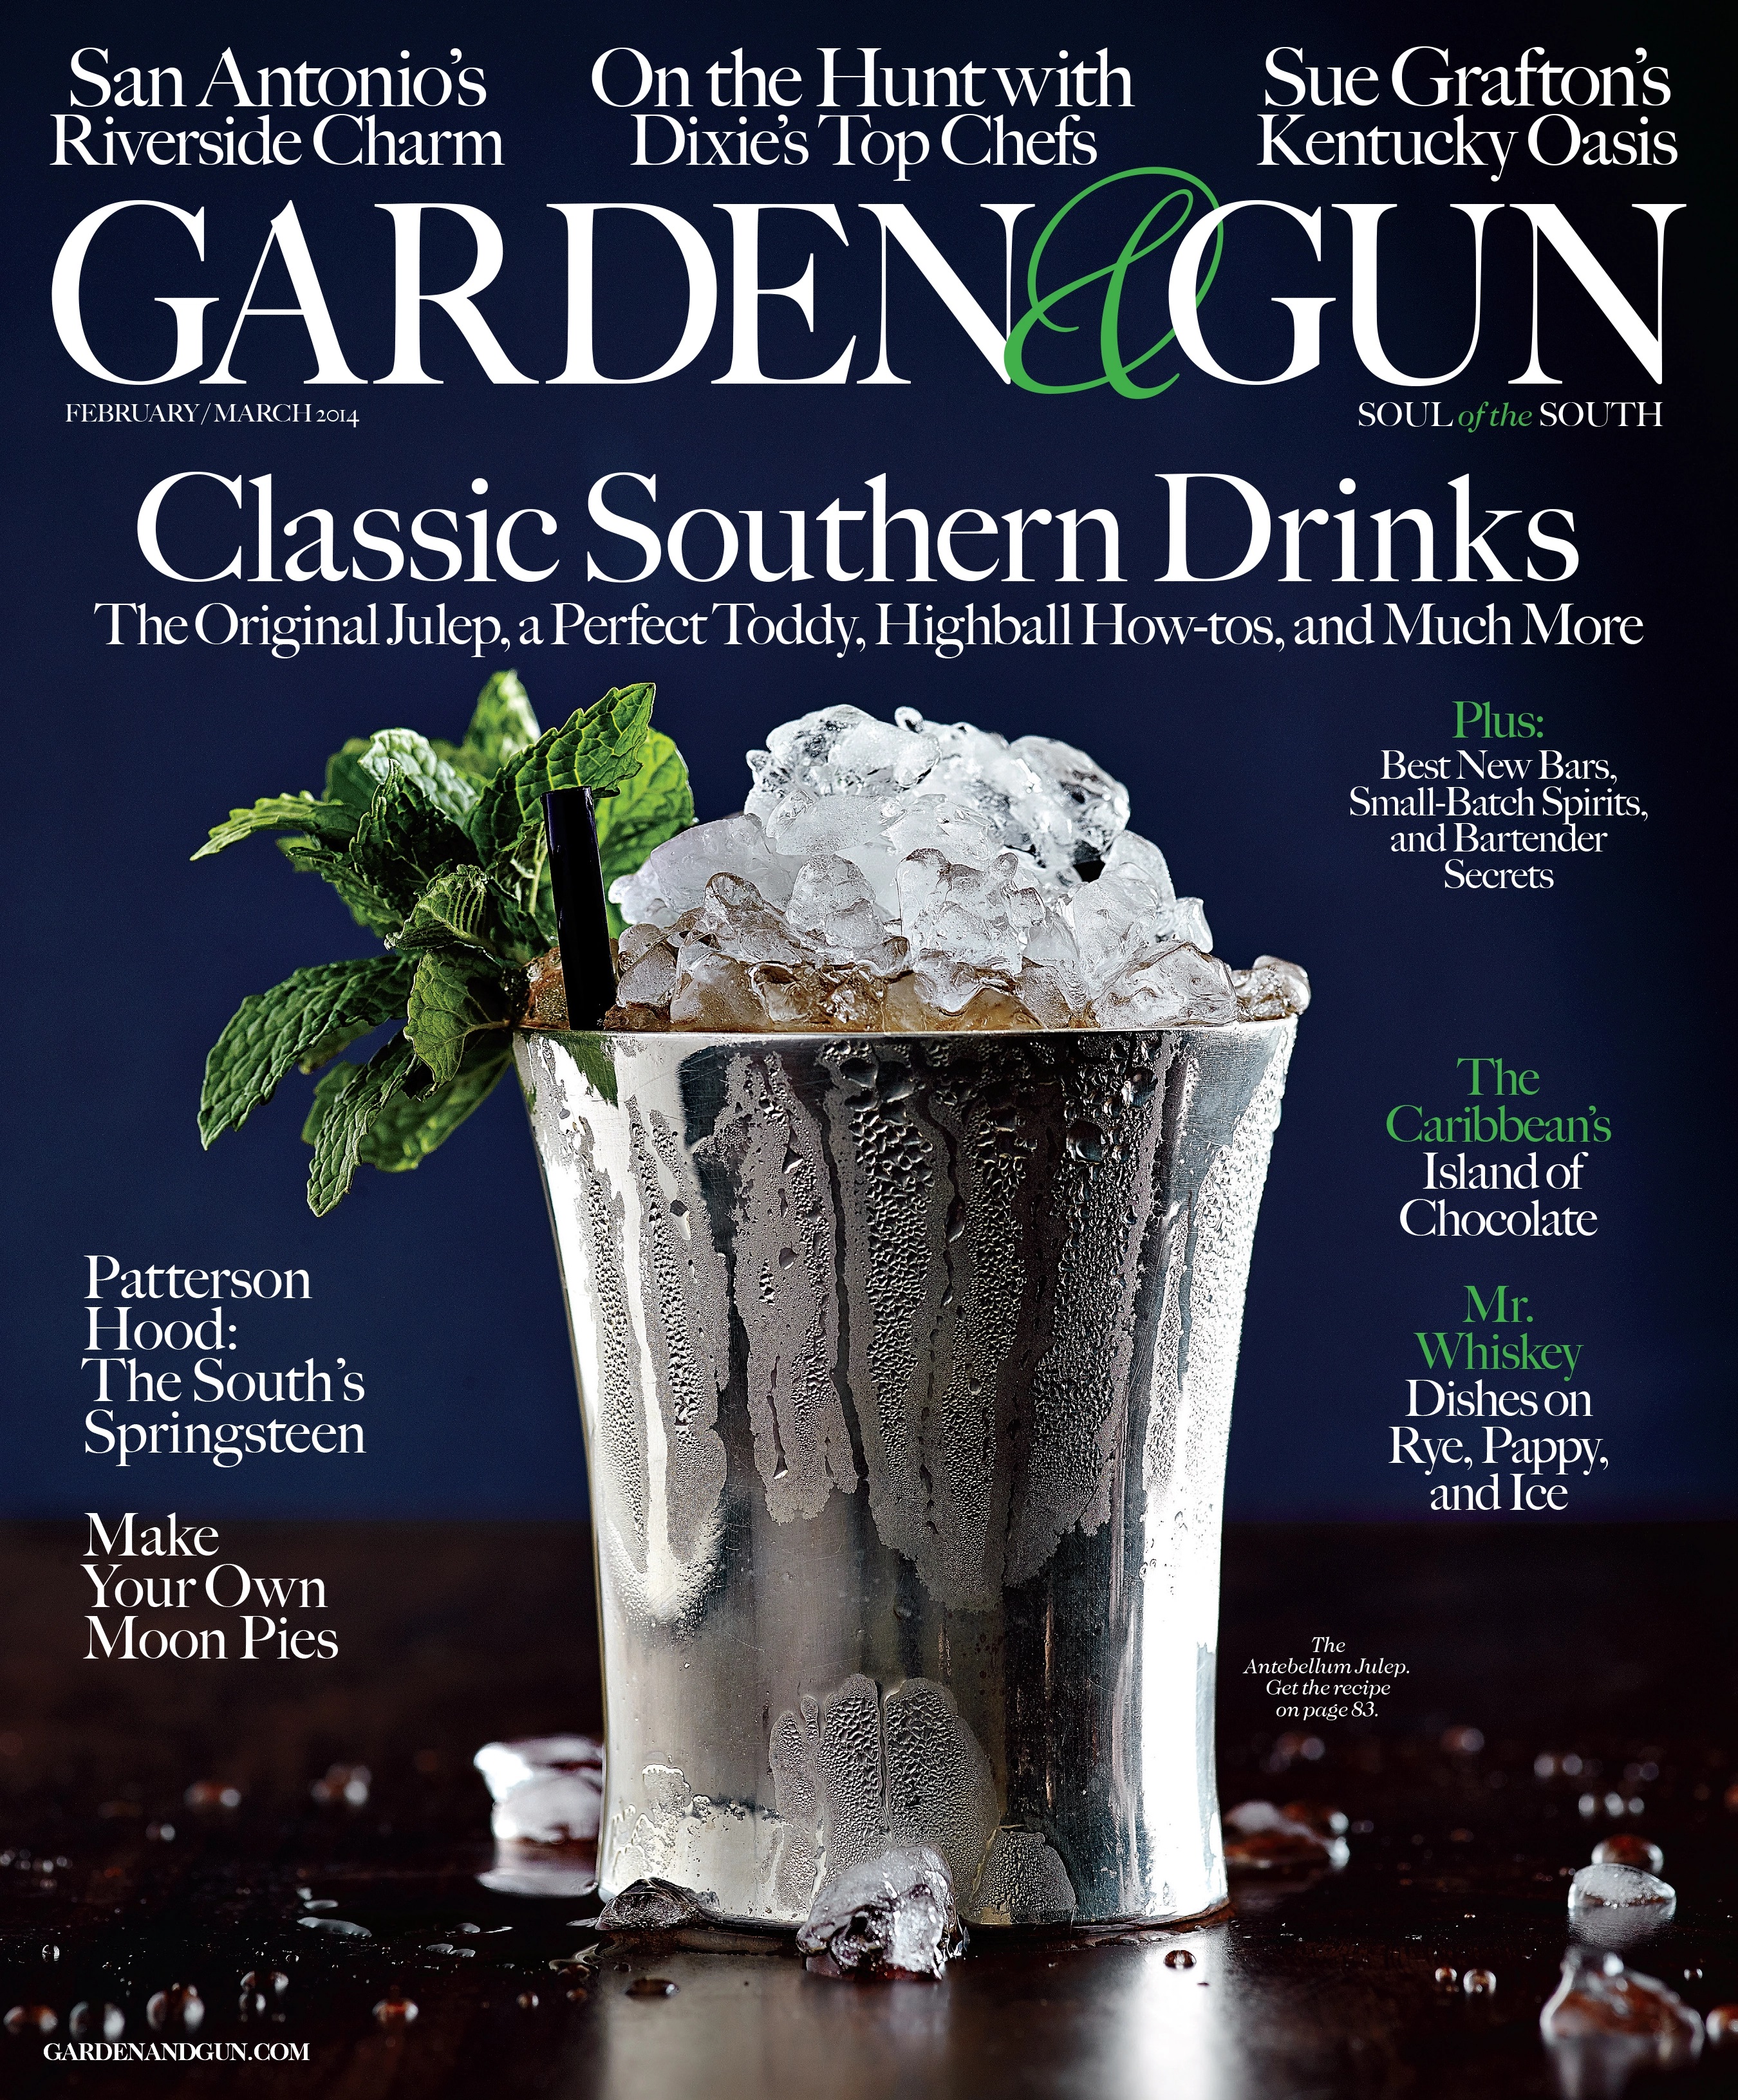 Garden & Gun-February/March 2014, "Classic Southern Drinks"